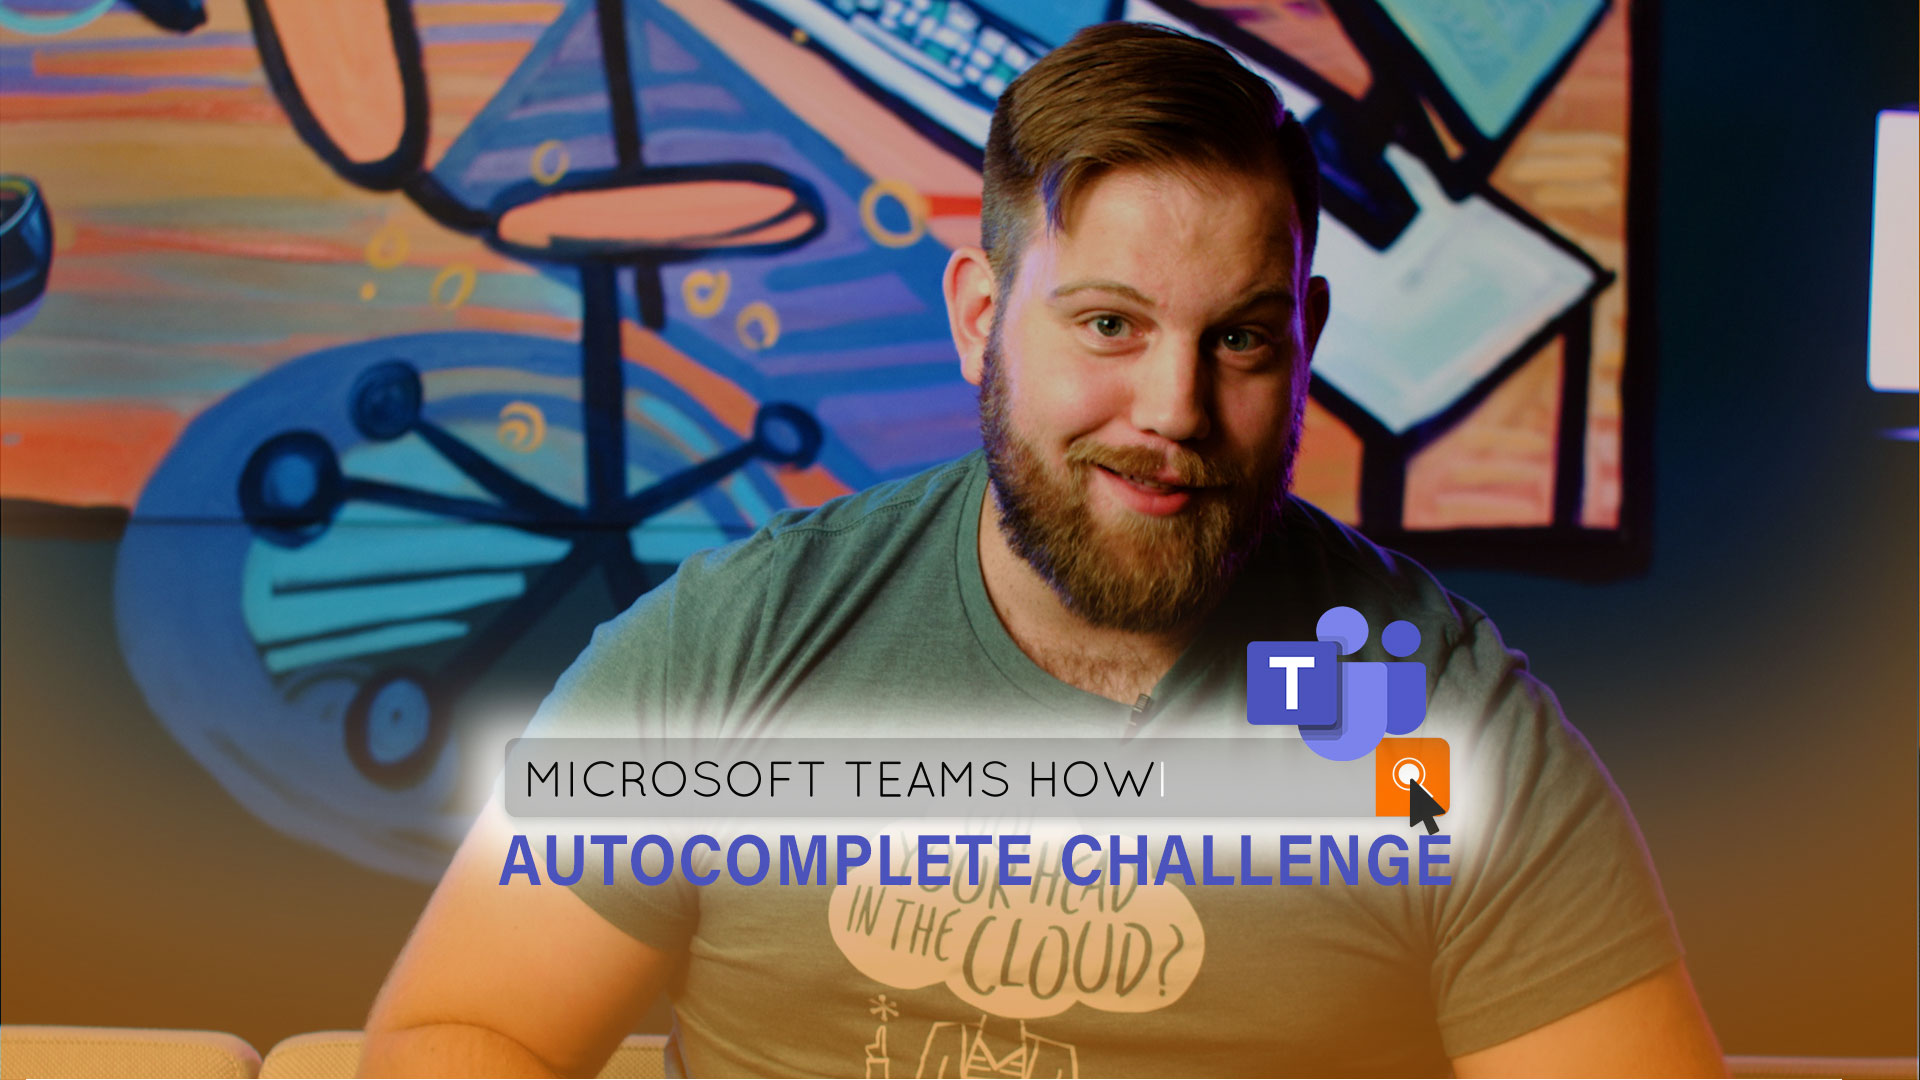 Microsoft Teams How | Autocomplete Challenge